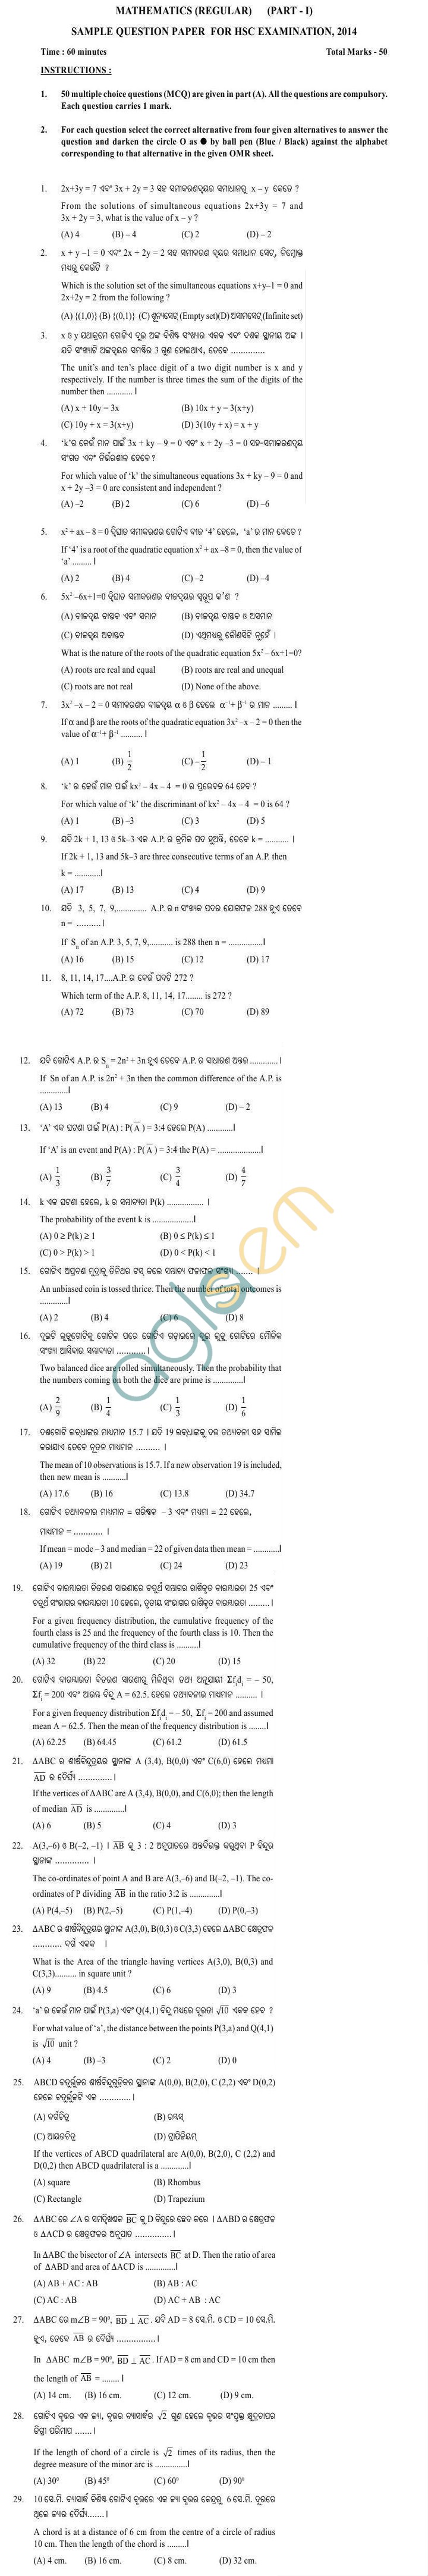 Odisha Board Sample Papers for HSC Exam 2014 - Mathematics